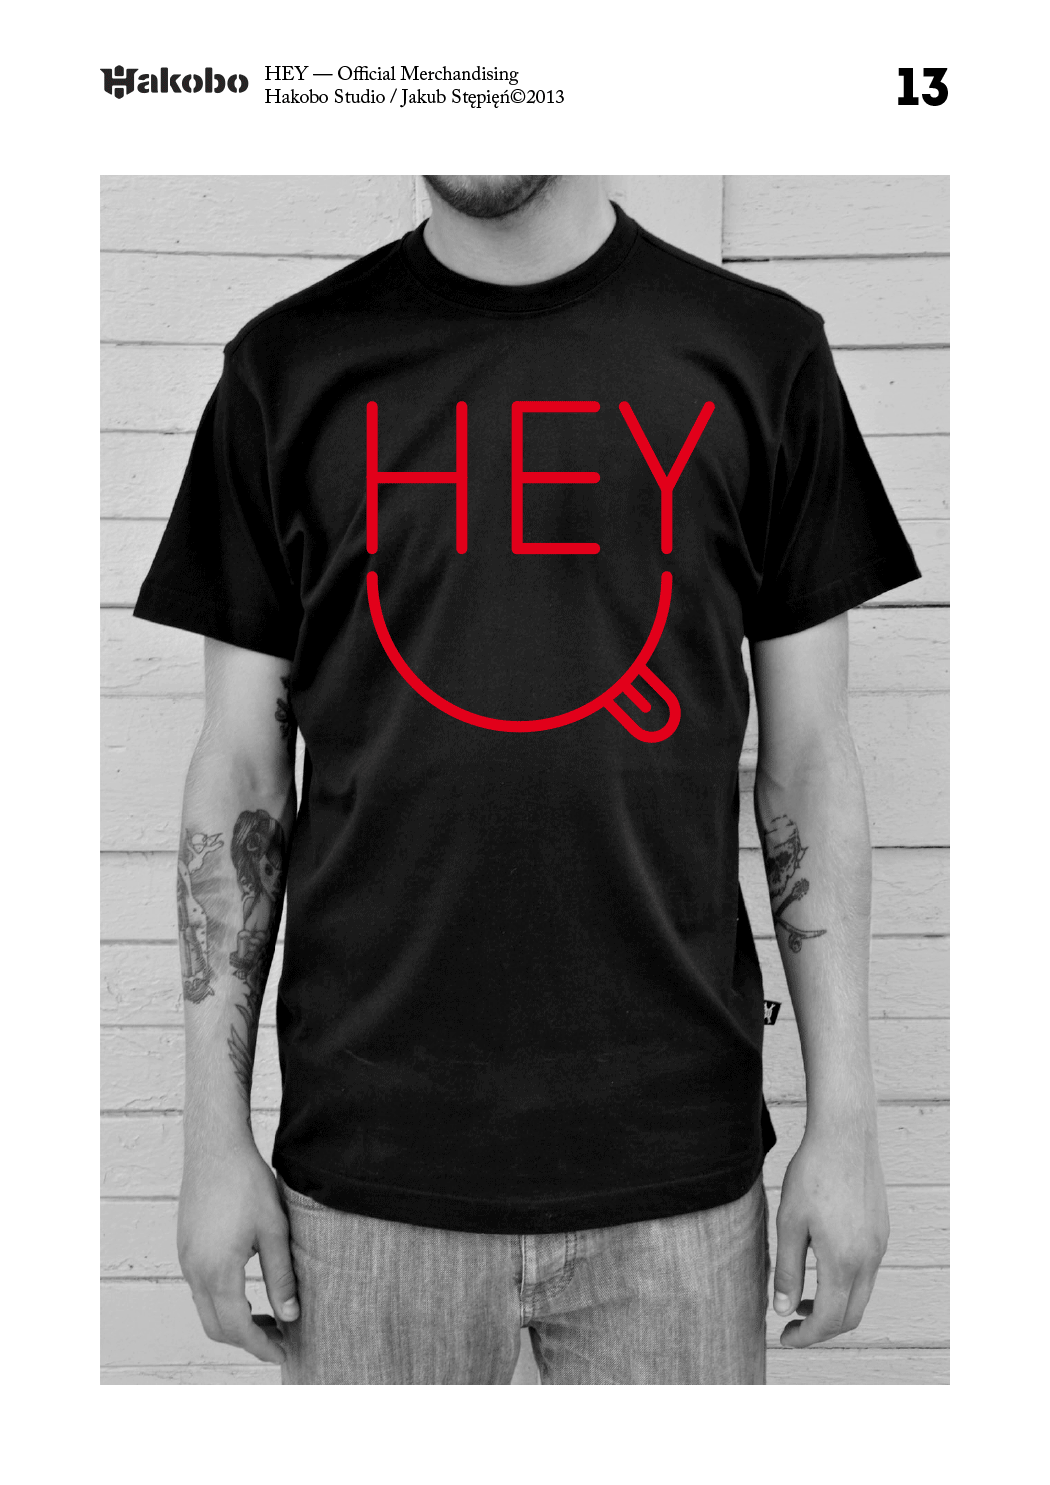 hey-band-merch-hakobo-jakub-stepien-prints-t-shirt-13